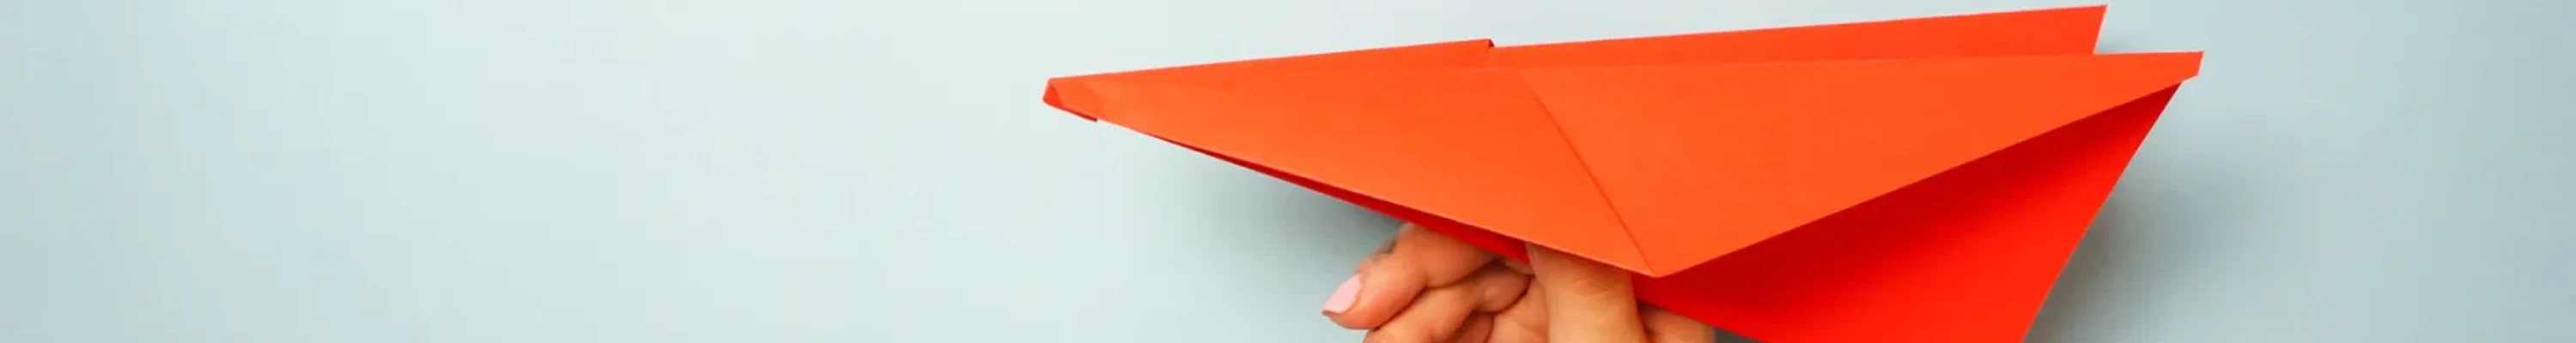 Red paper aeroplane being held